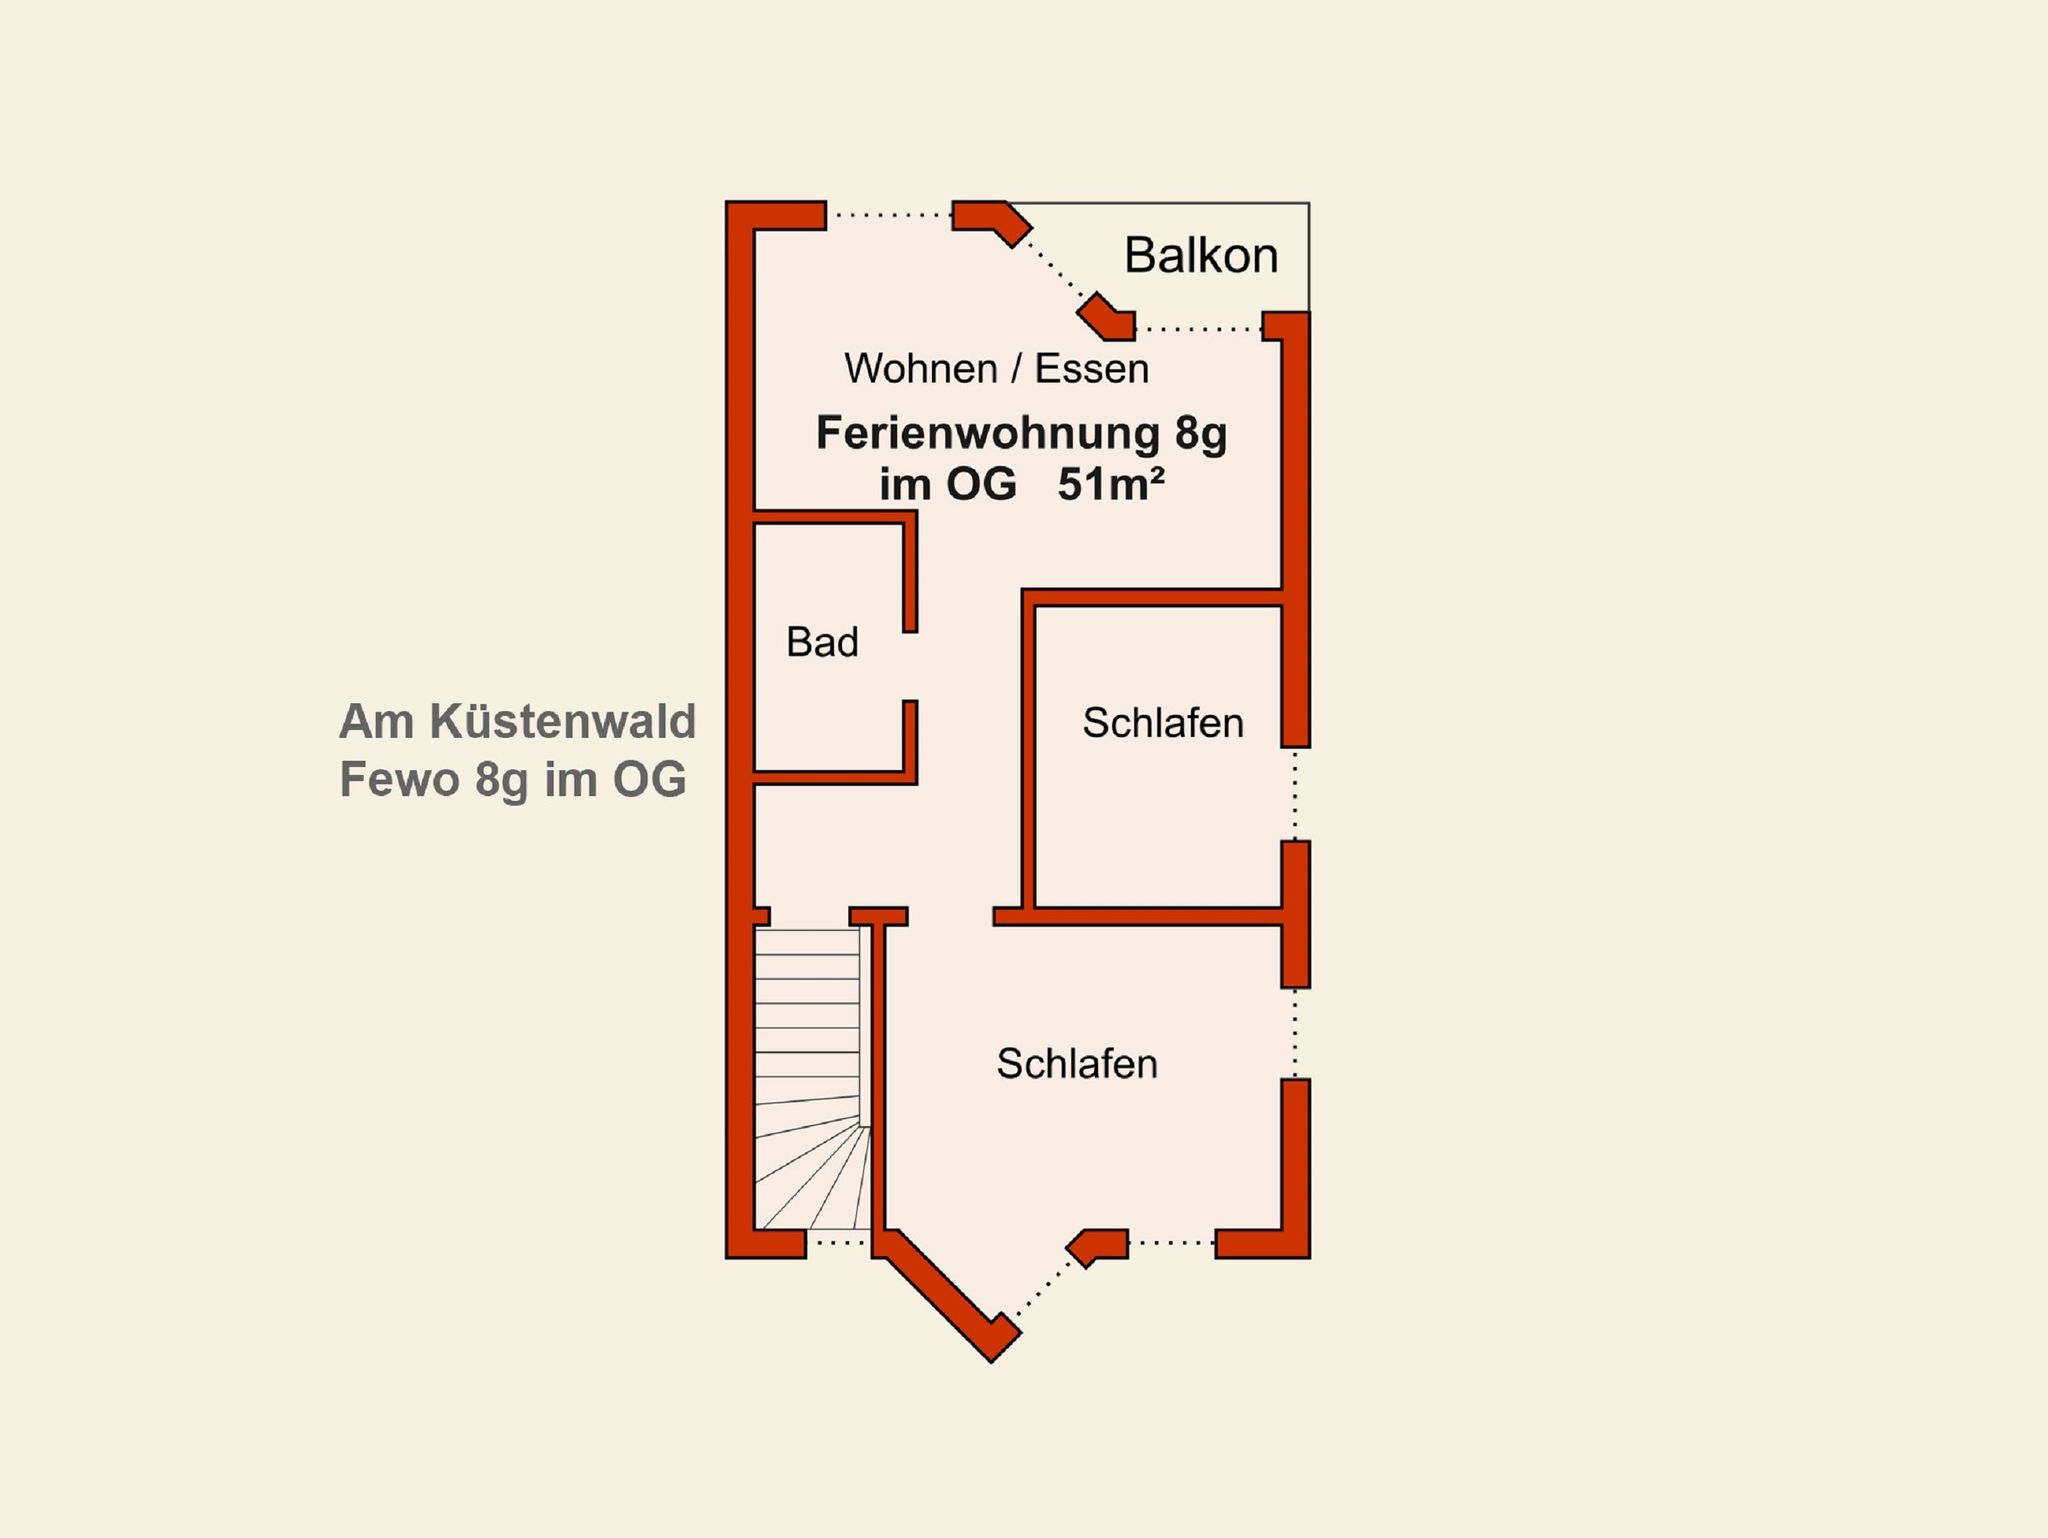 Ferienbungalow Haus Rolf - Objekt 39079